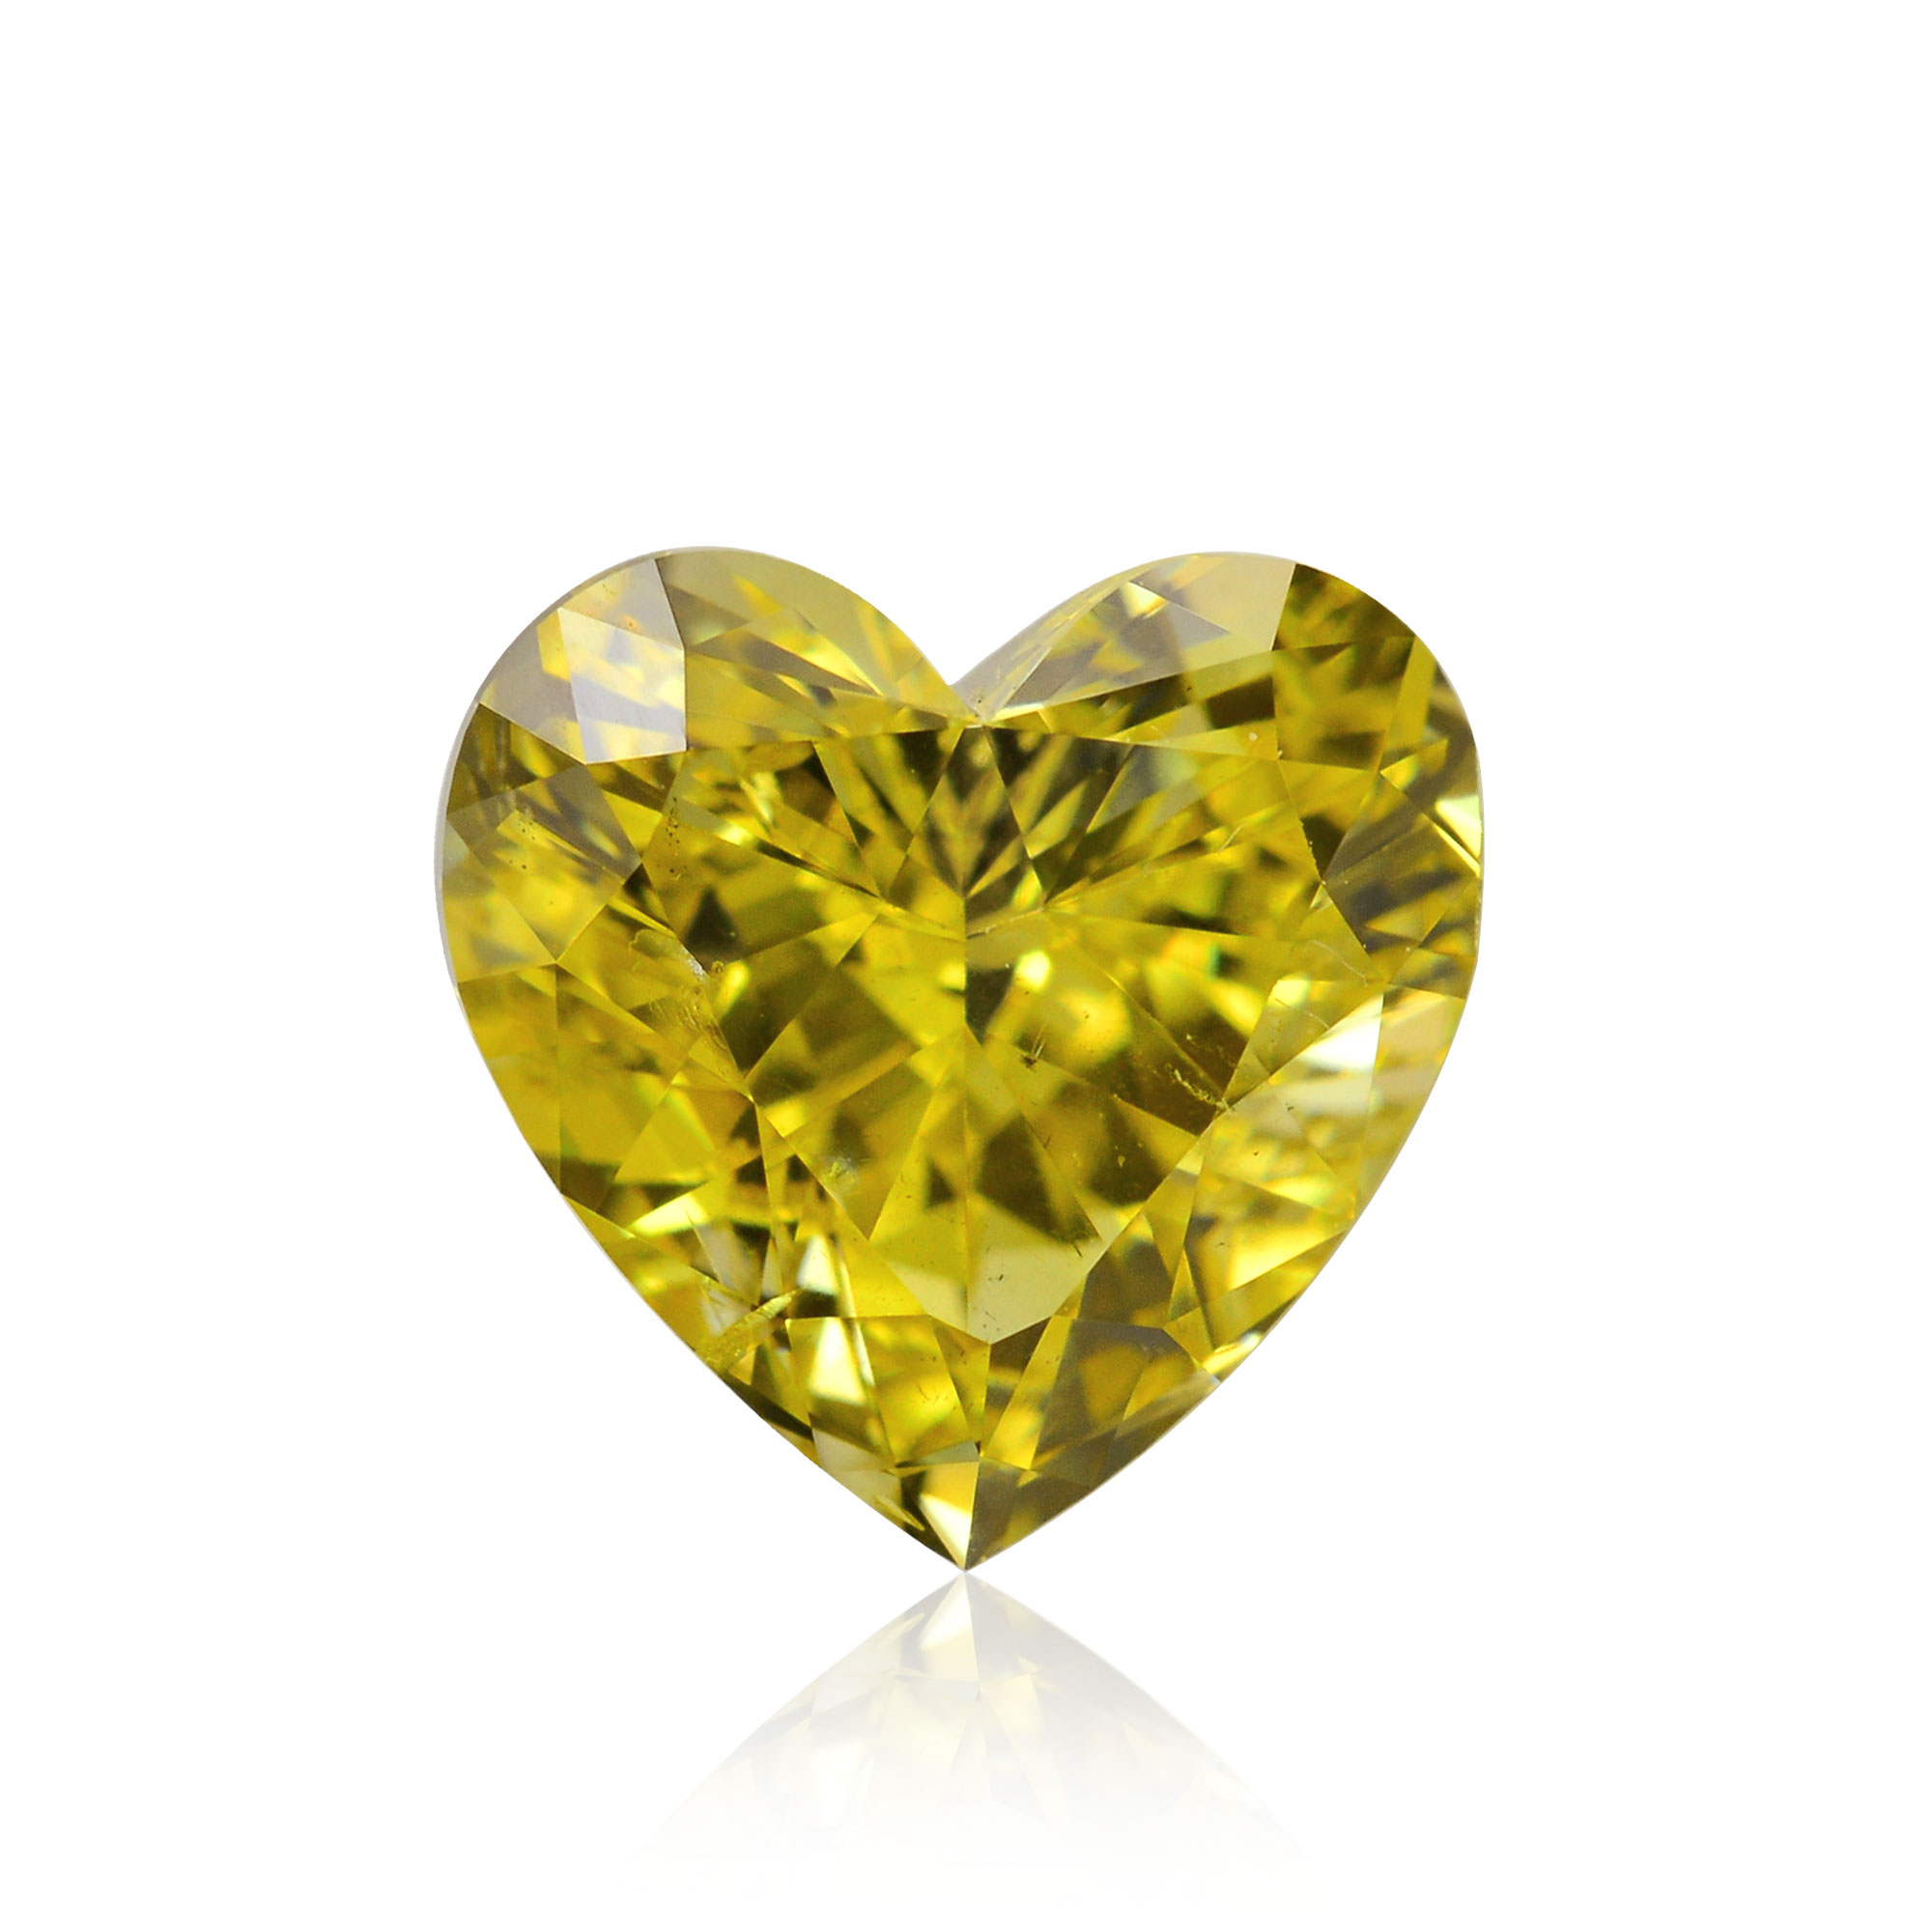 1.36 carat, Fancy Vivid Yellow Diamond, Heart Shape, SI2 Clarity